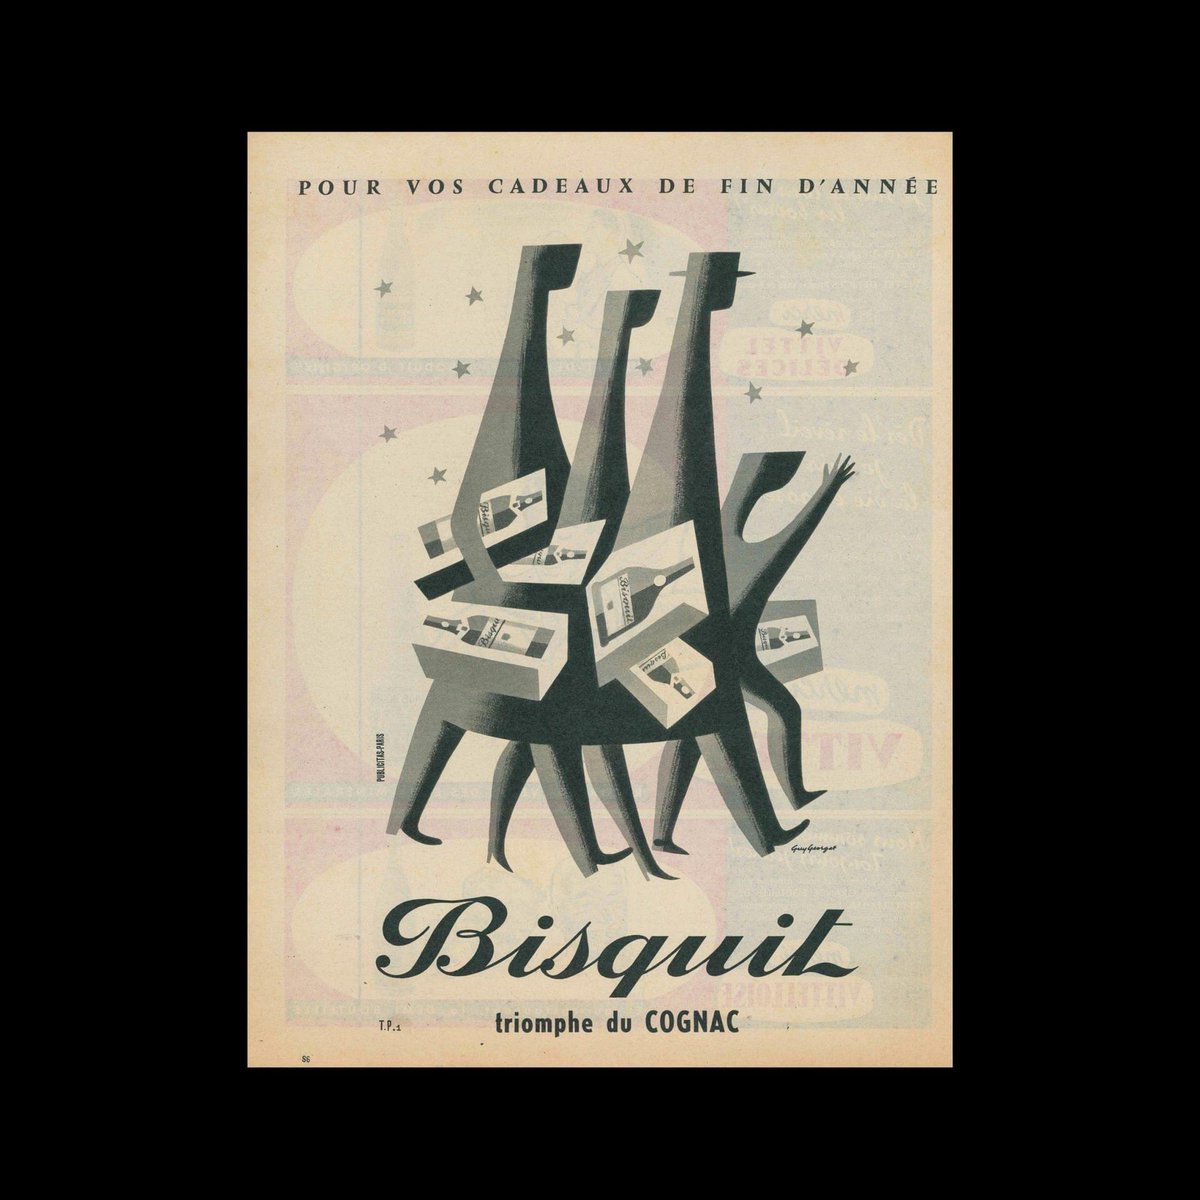 Bisquit triomphe du cognac, Advertisement, 1956. Design by Guy Georget.
#vintageadvertising #guygeorget designreviewed.com/artefacts/bisq…